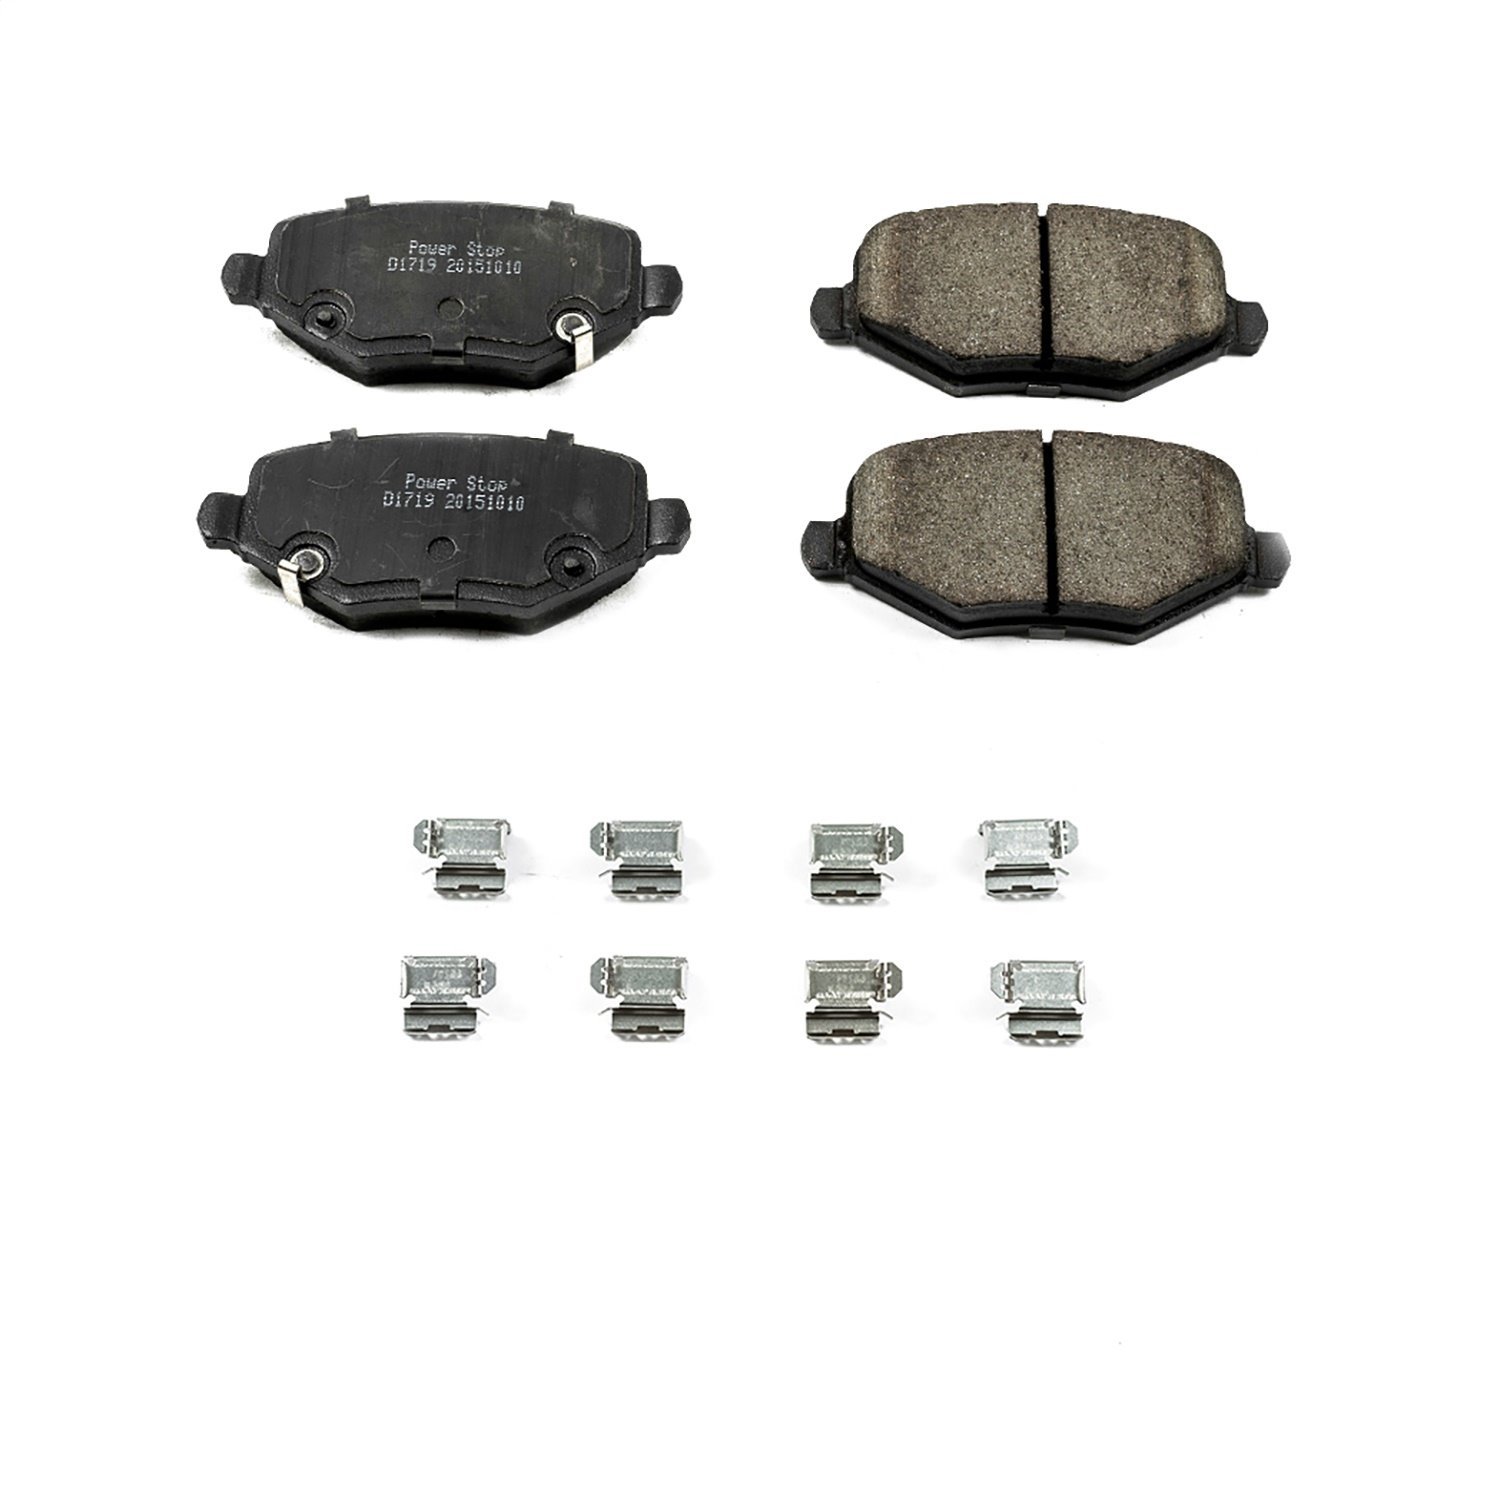 Z17 Evolution Ceramic Rear Brake Pads Fits Select 2012-2016 Chrysler, Dodge, Ram, Volkswagen Models